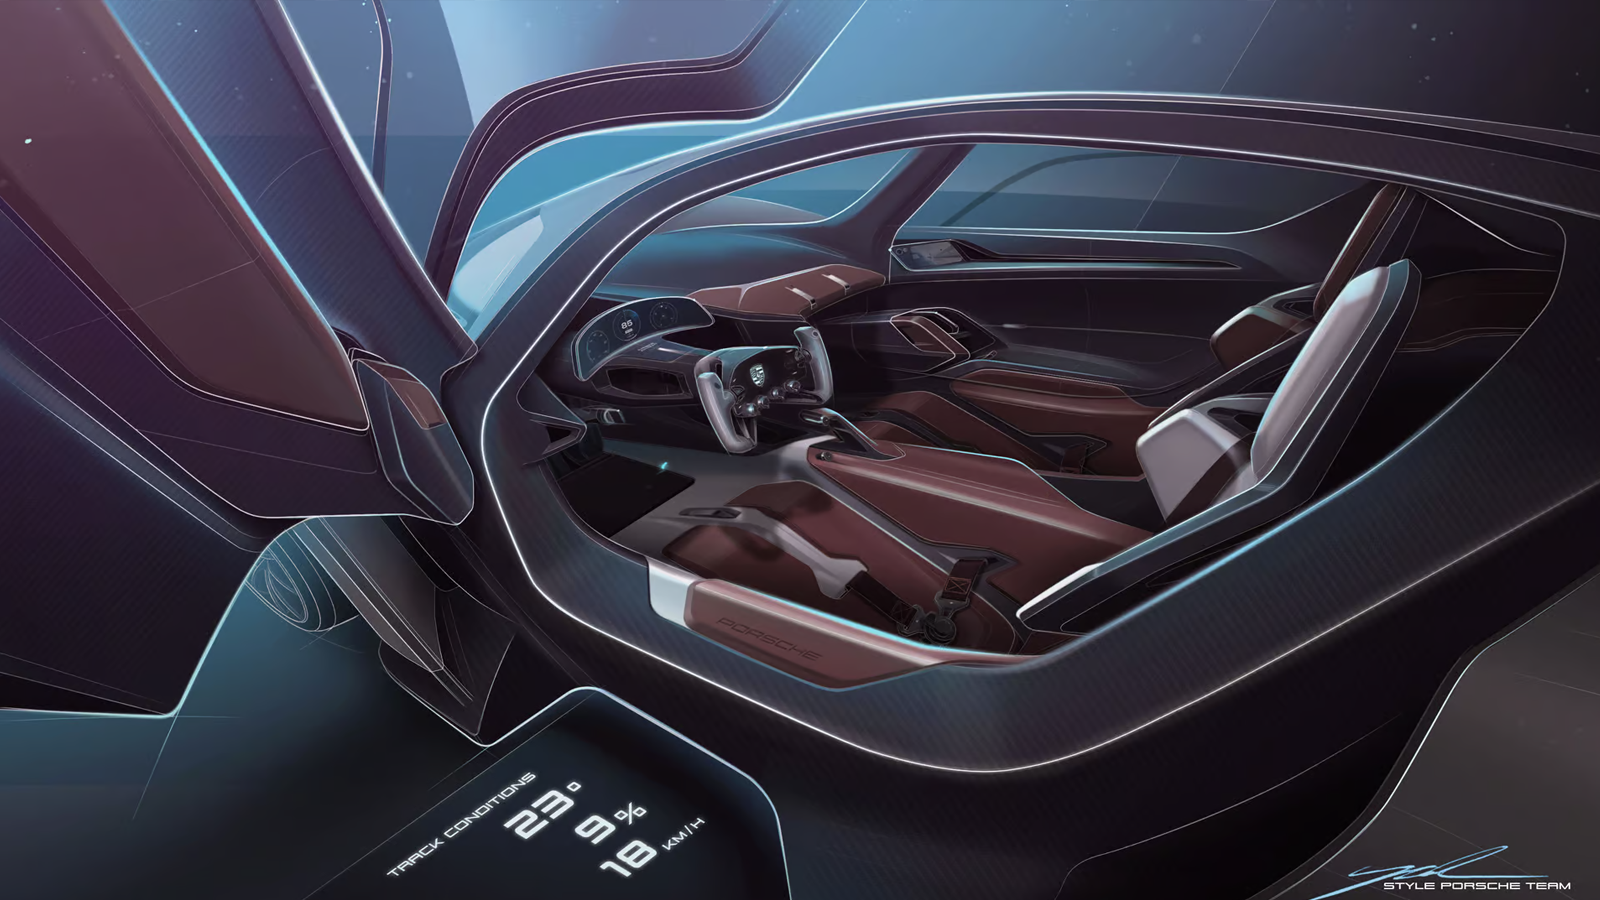 Porsche Mission X: Revolutionary hypercar of the future